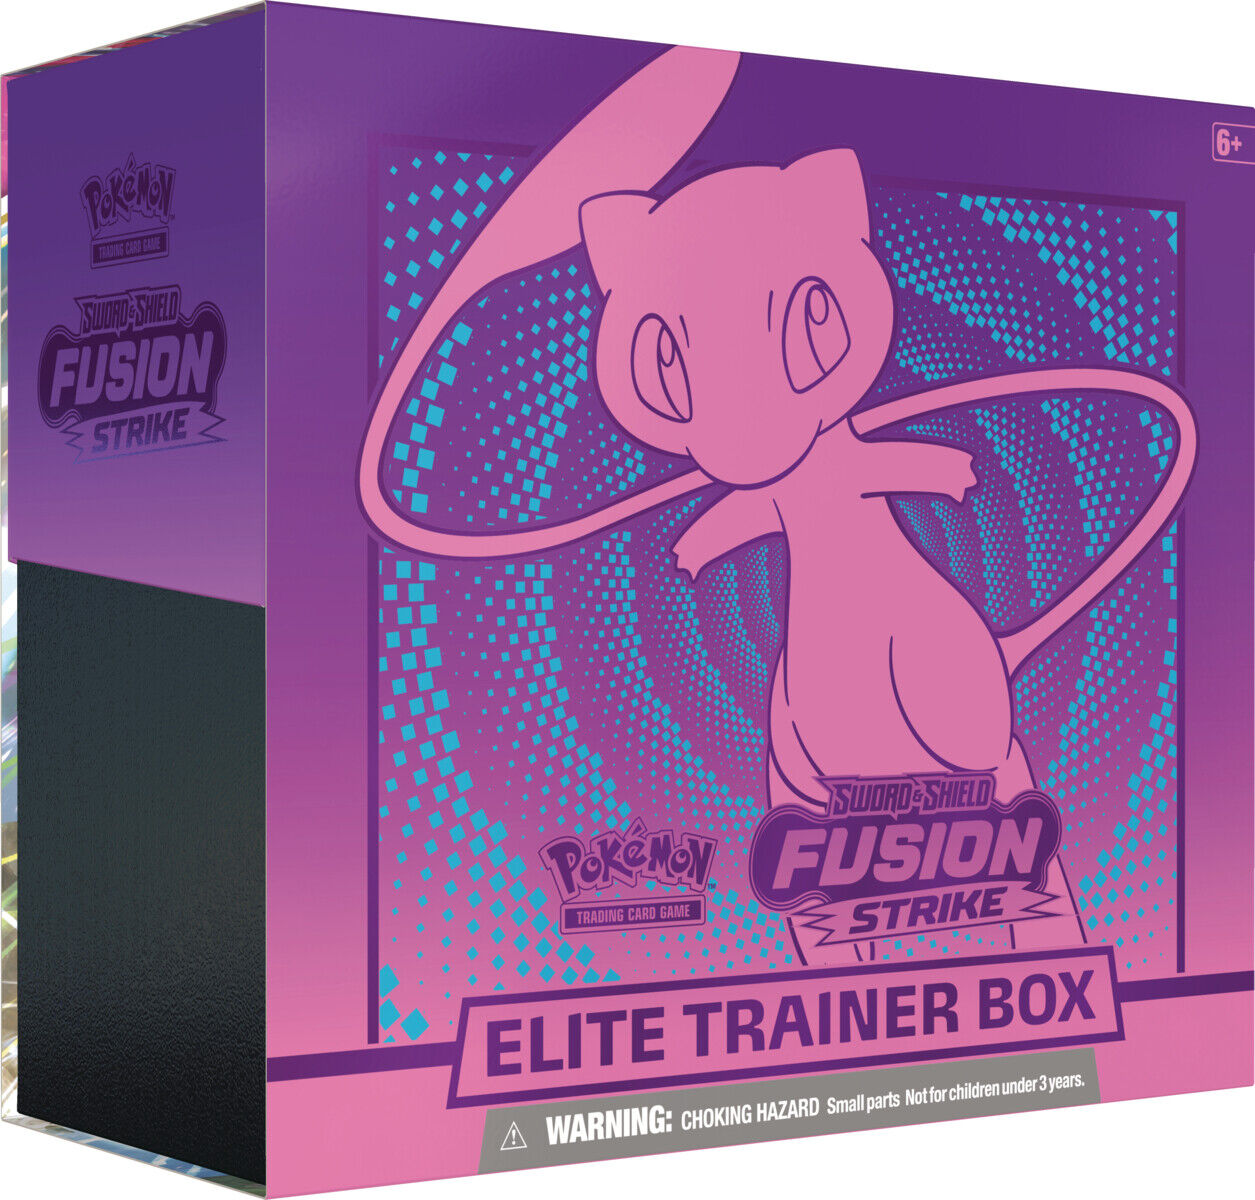 Pokemon - Fusion Strike Elite Trainer Box / ETB - EN - NEW & ORIGINAL PACKAGING Sealed